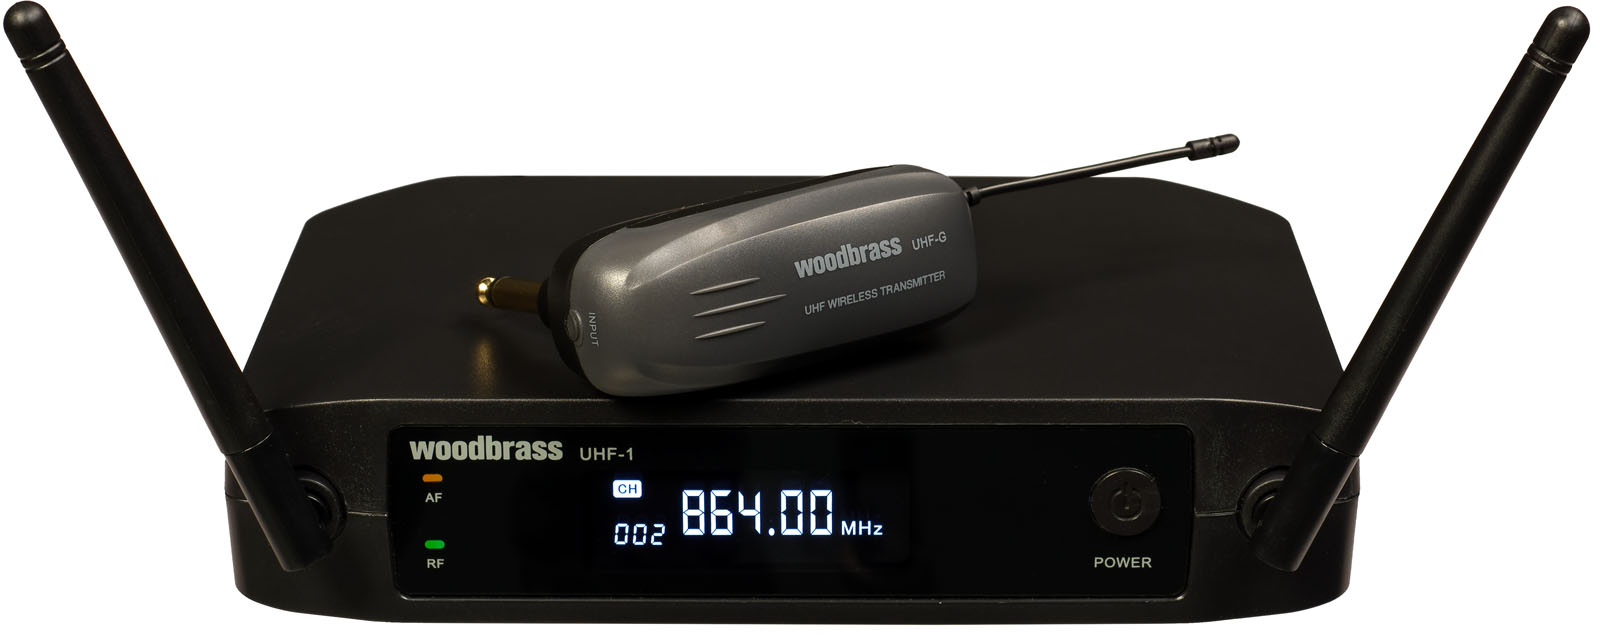 WOODBRASS UHF-1G-F2 (F2 : 863.5 MHZ)